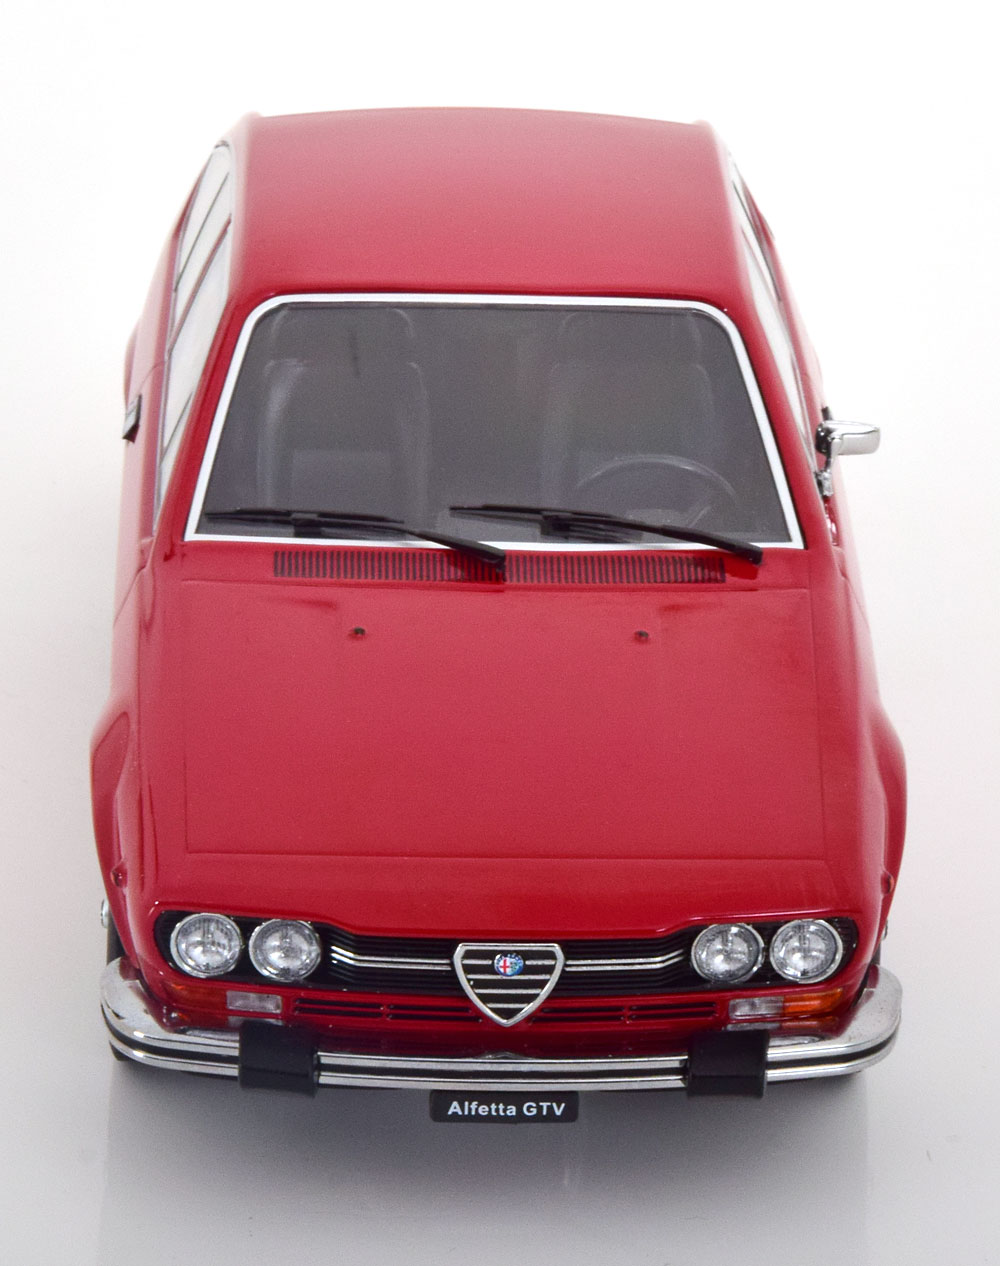 Alfa Romeo Alfetta 2000 GTV 1976 Rood 1-18 KK-Scale